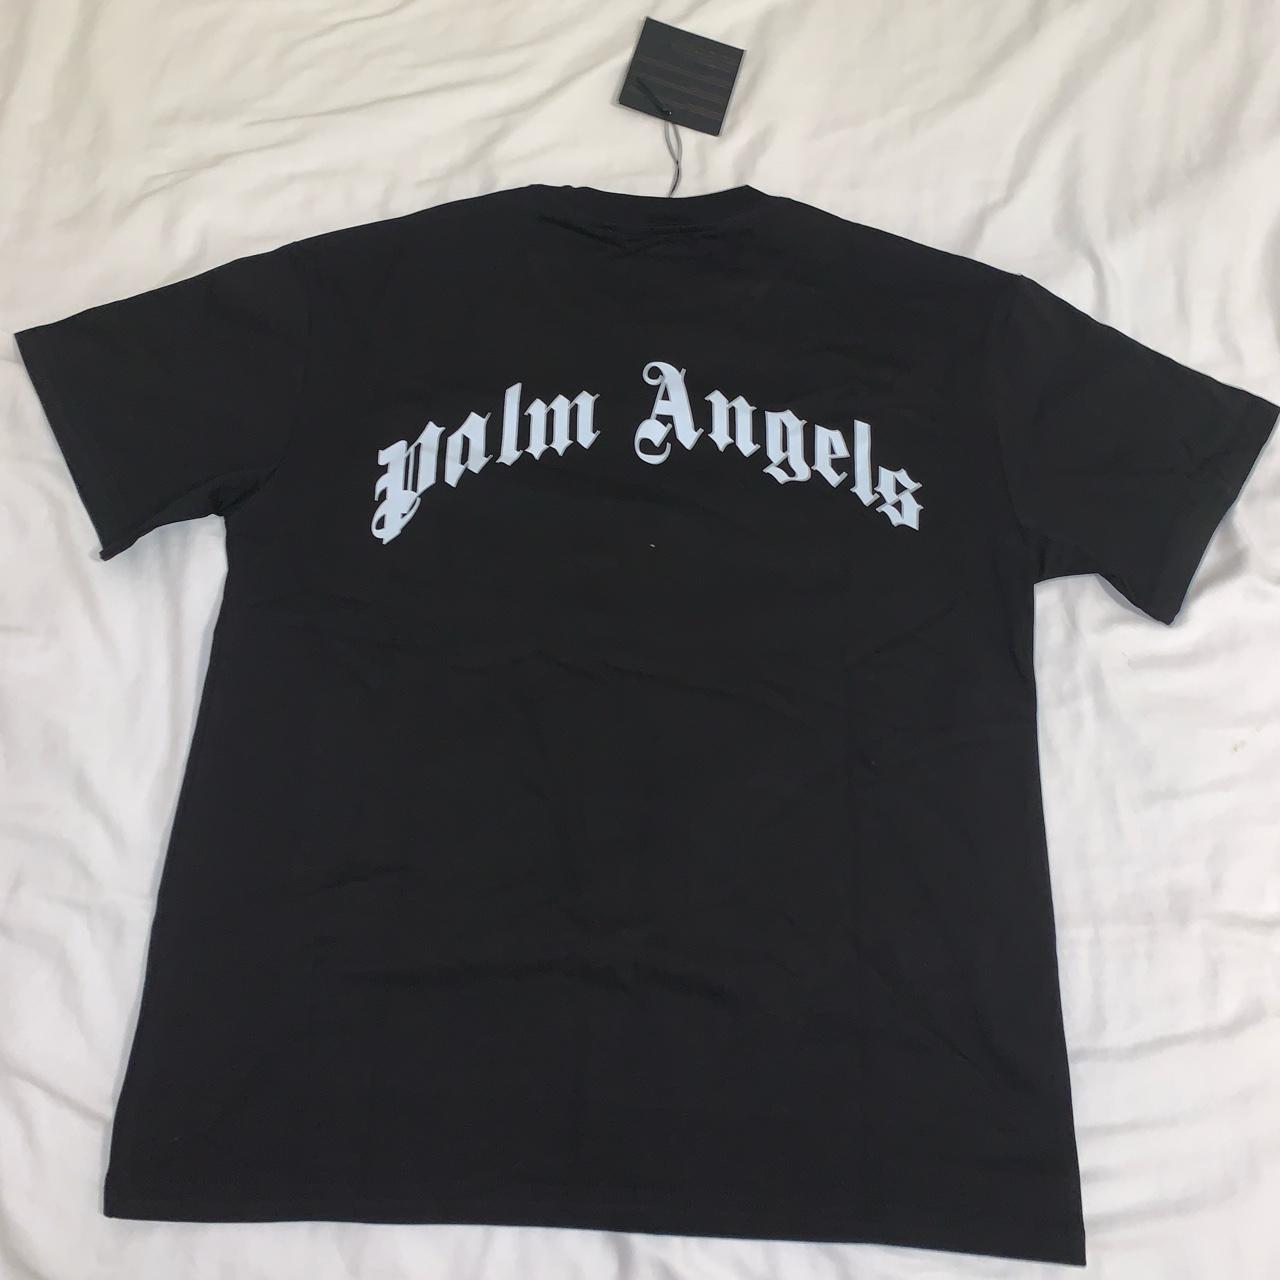 Palm Angels Bear In Love Logo T-shirt Black